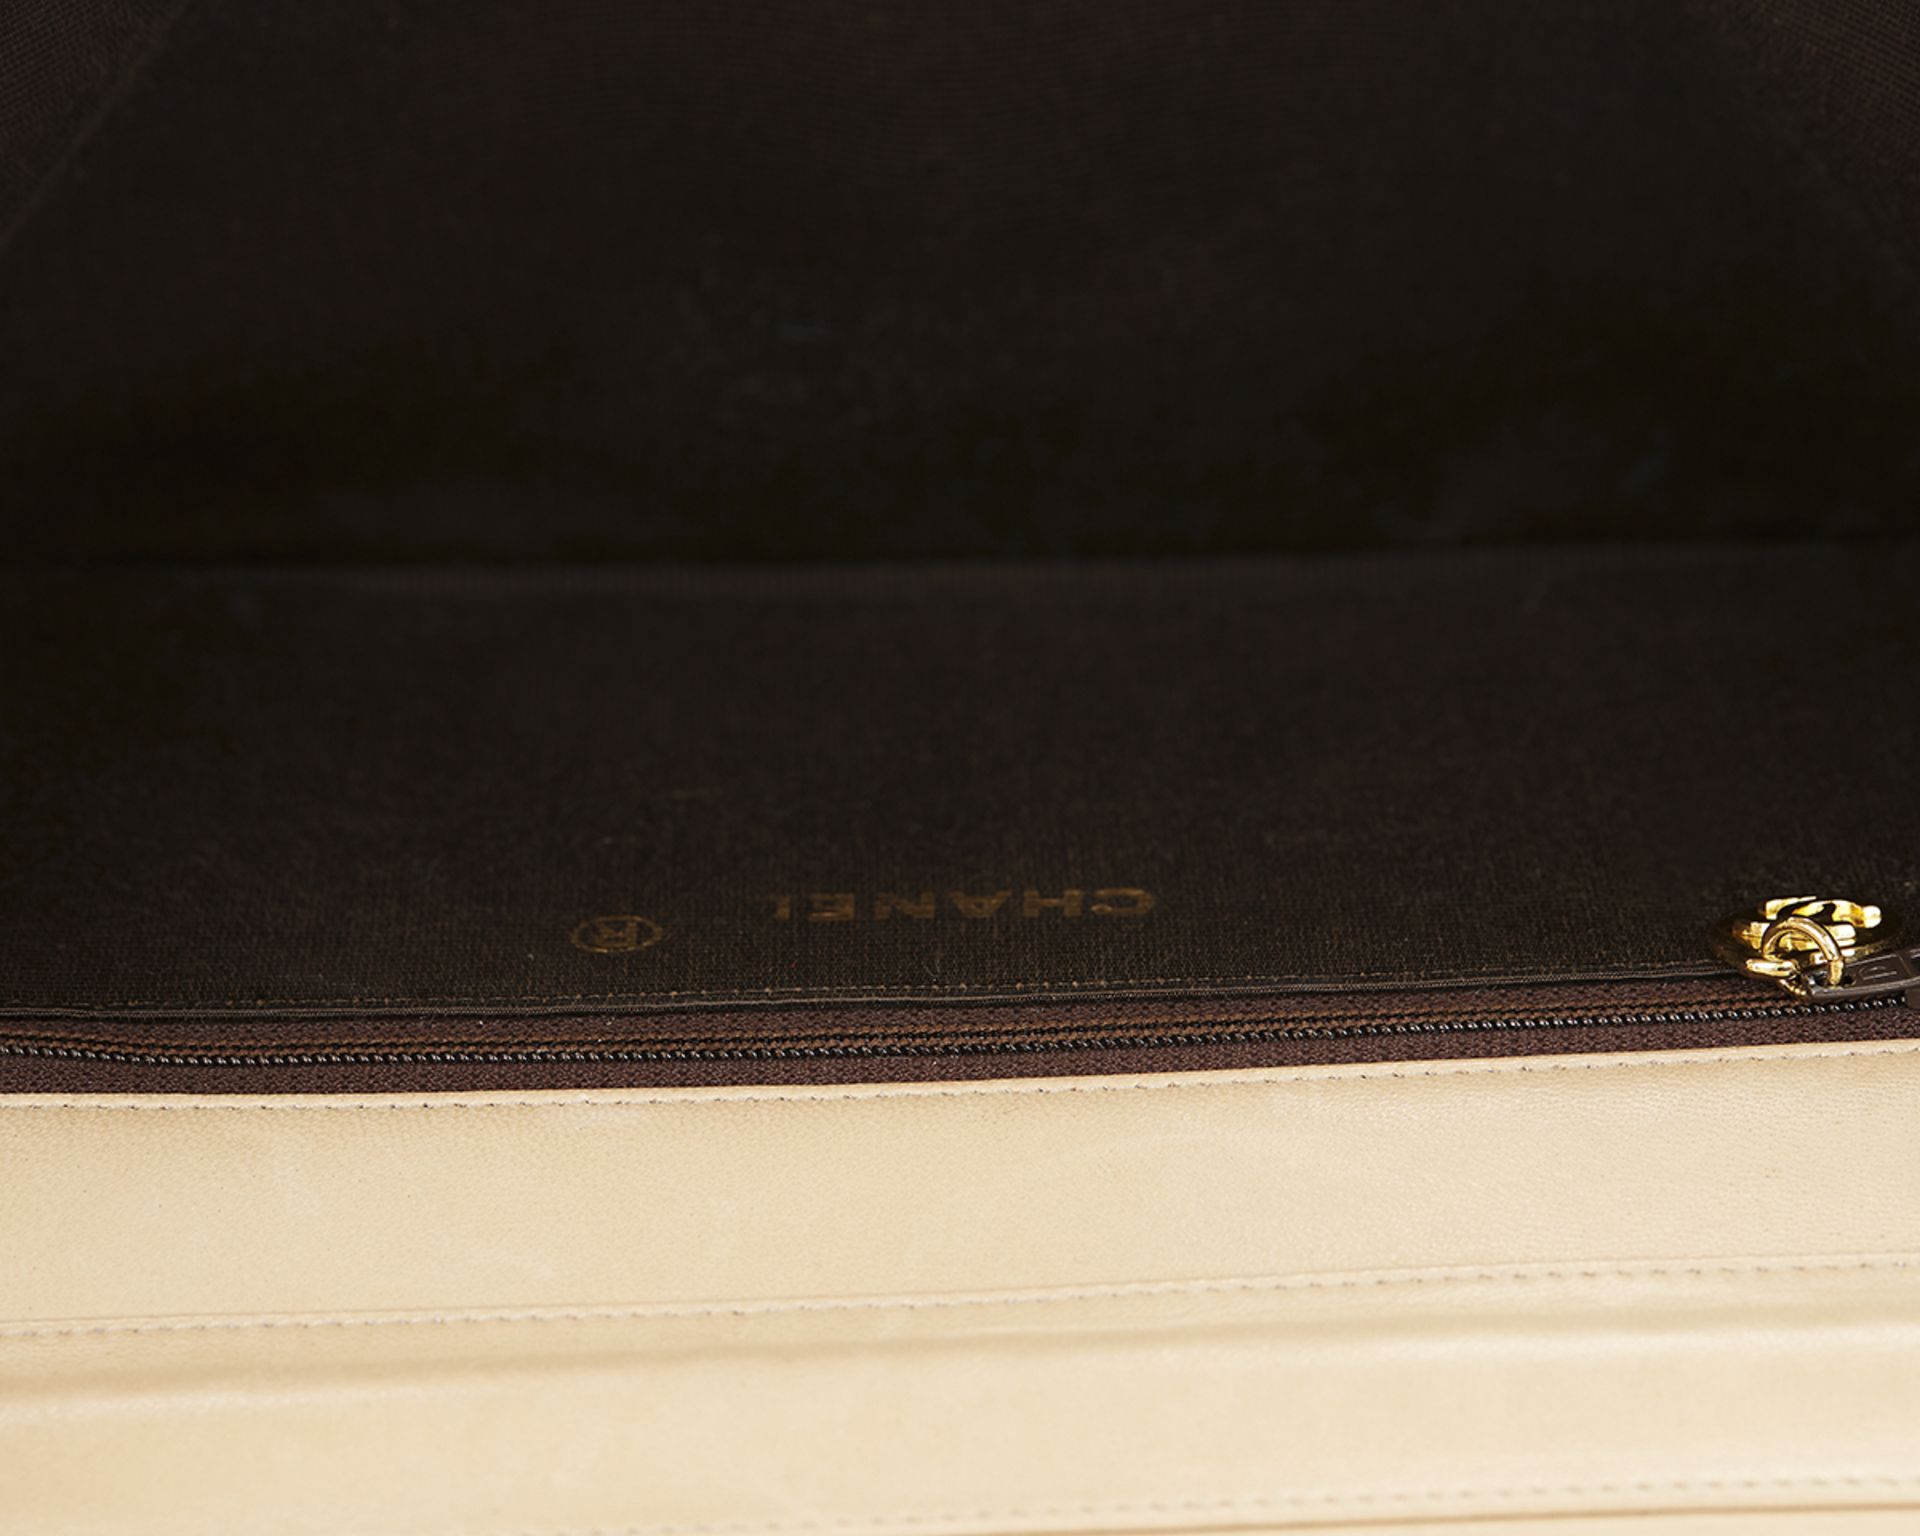 HB022 Chanelc- Single Flap Bag - Image 9 of 10